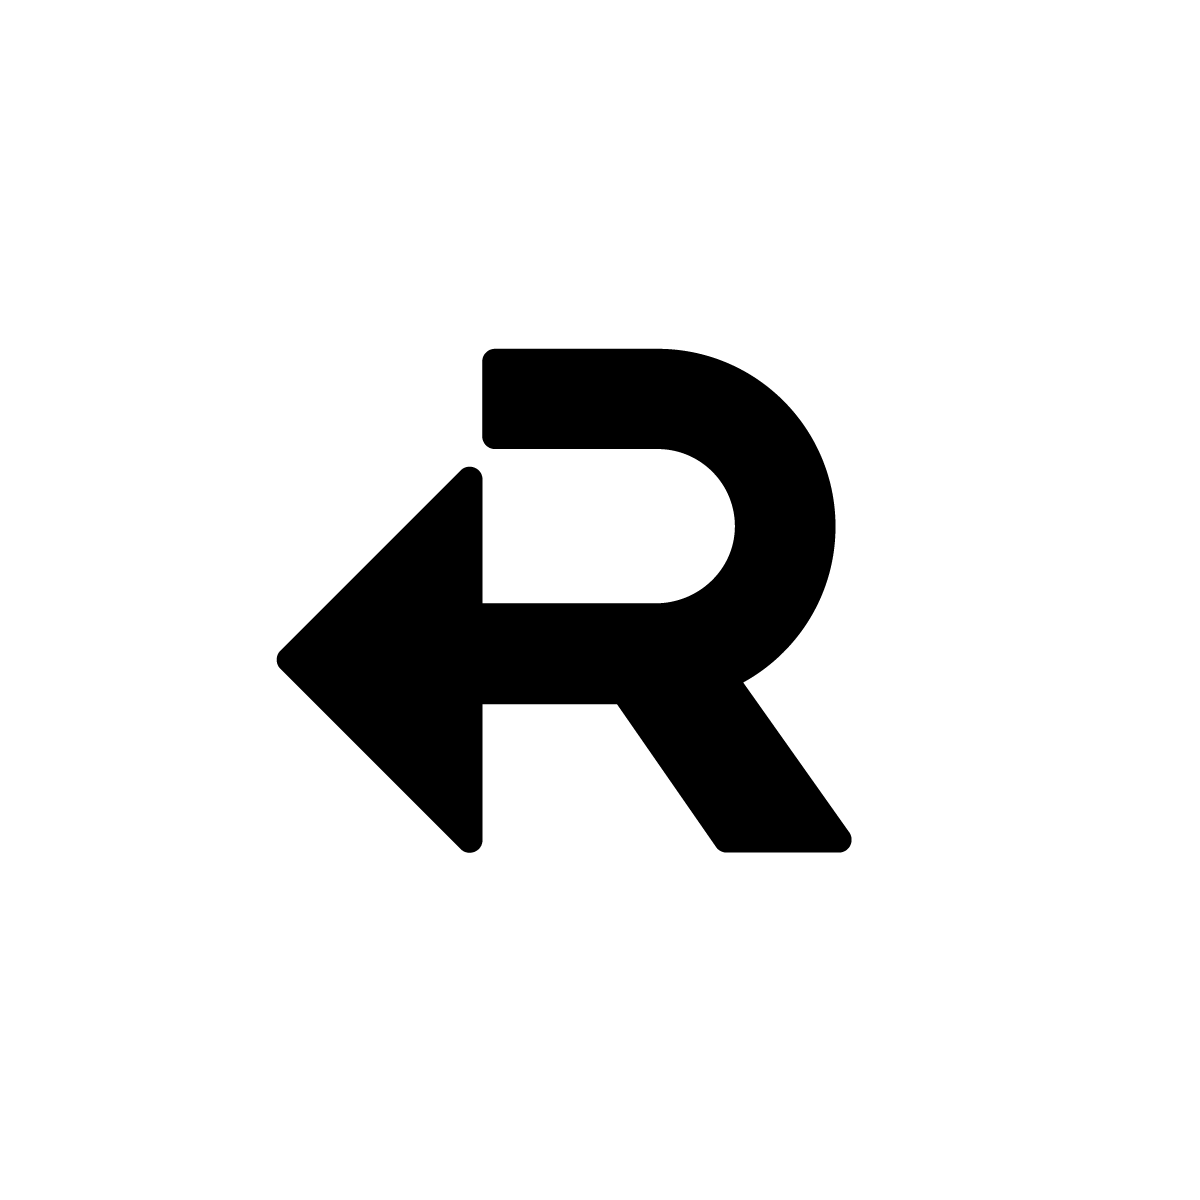 return-r-logo-for-sale